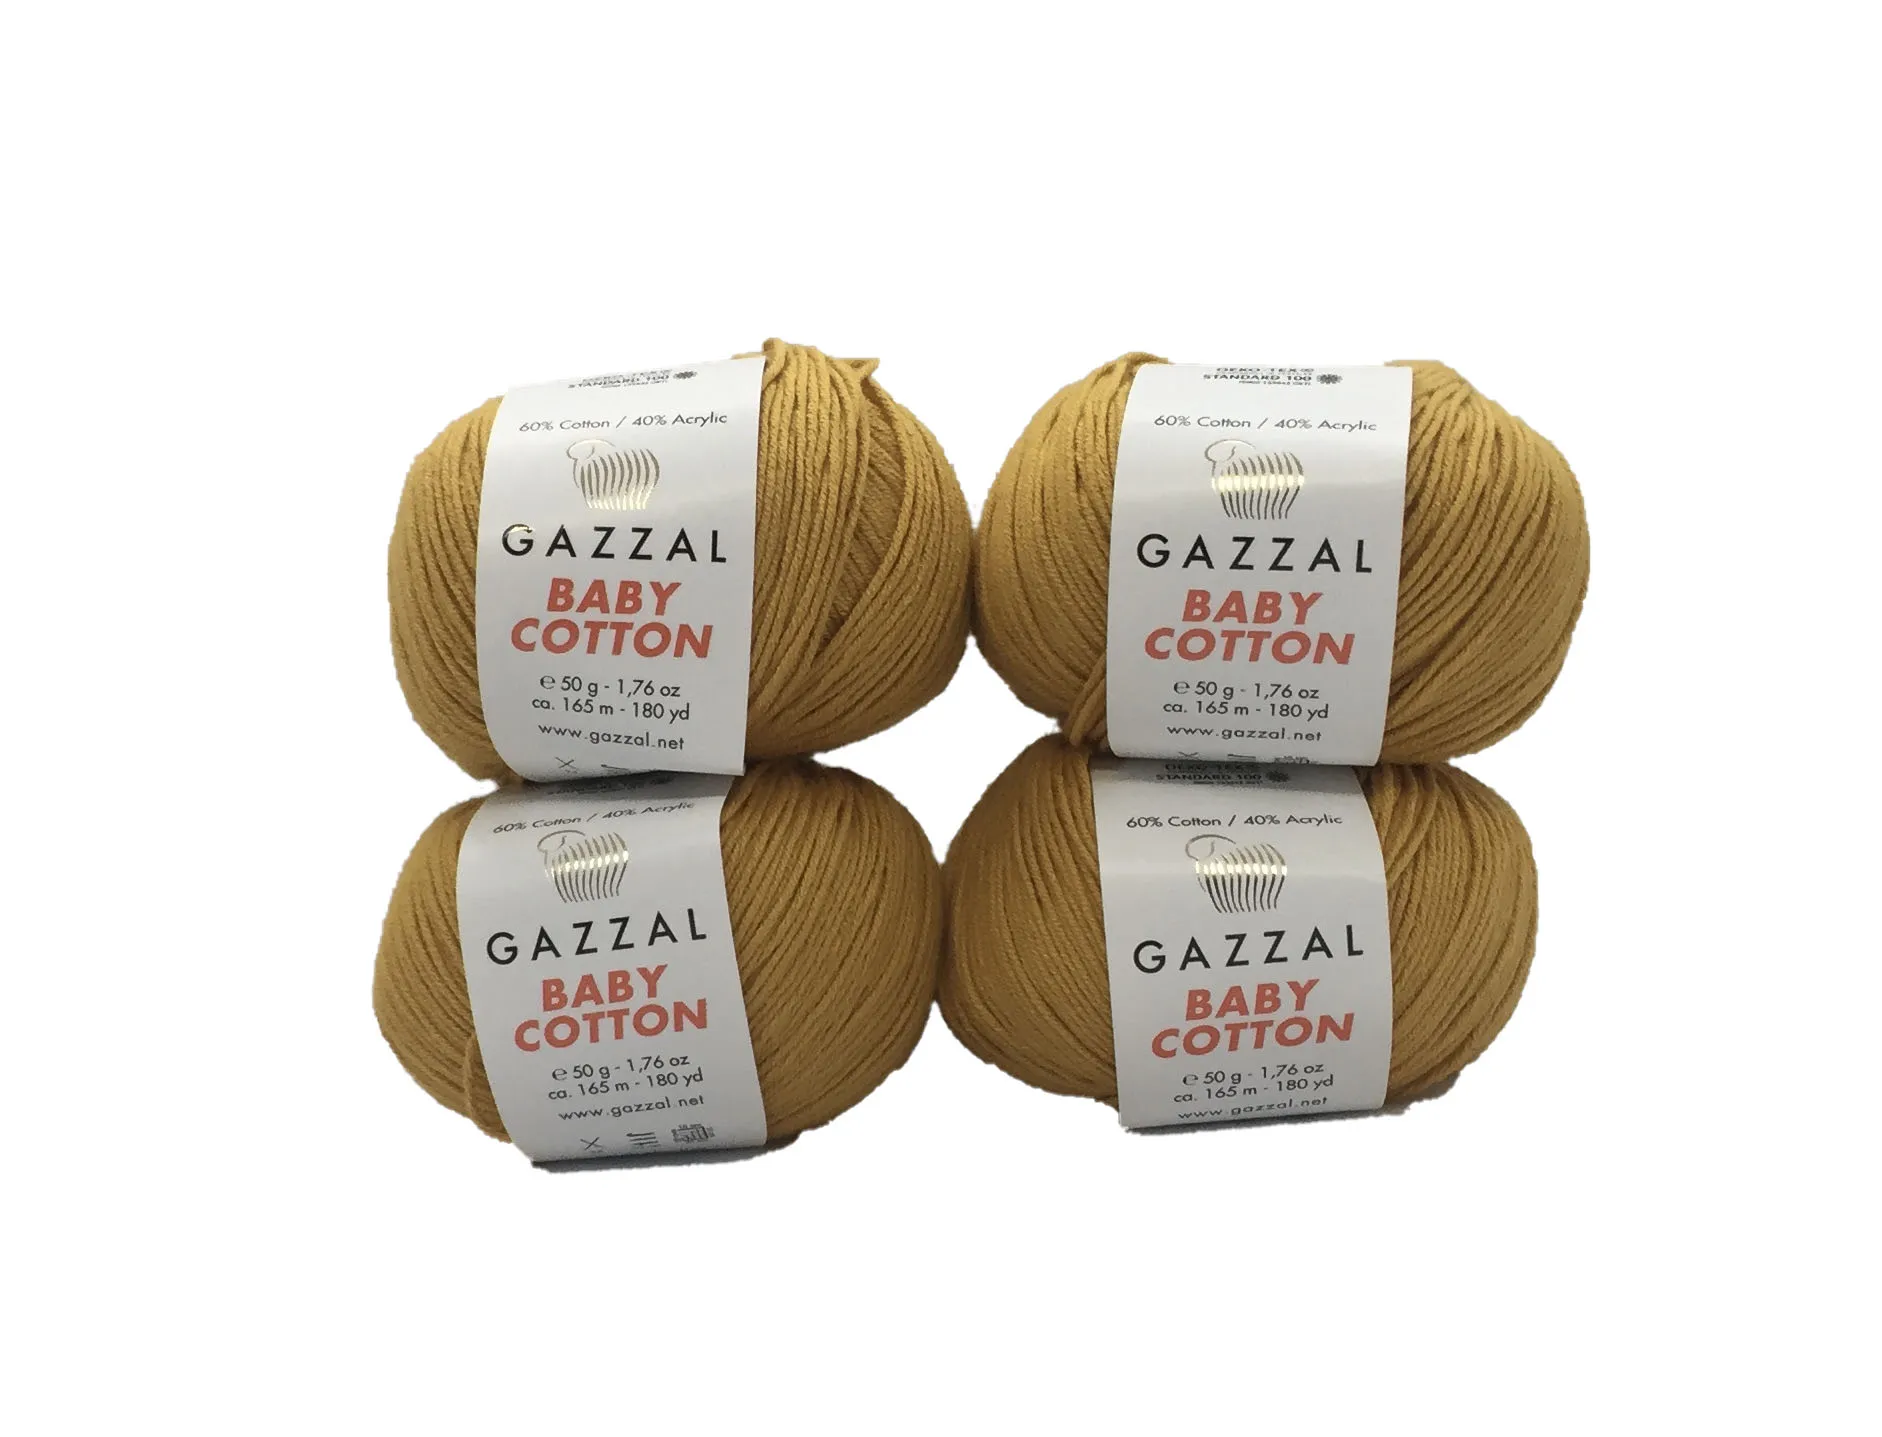 

4 In 1 Pack Yarn For Hand Knitting Baby Cotton Gazzal DIY Amigurumi Models Hobby (Each 50g 165m) 60 Cotton 40 of Acrylic